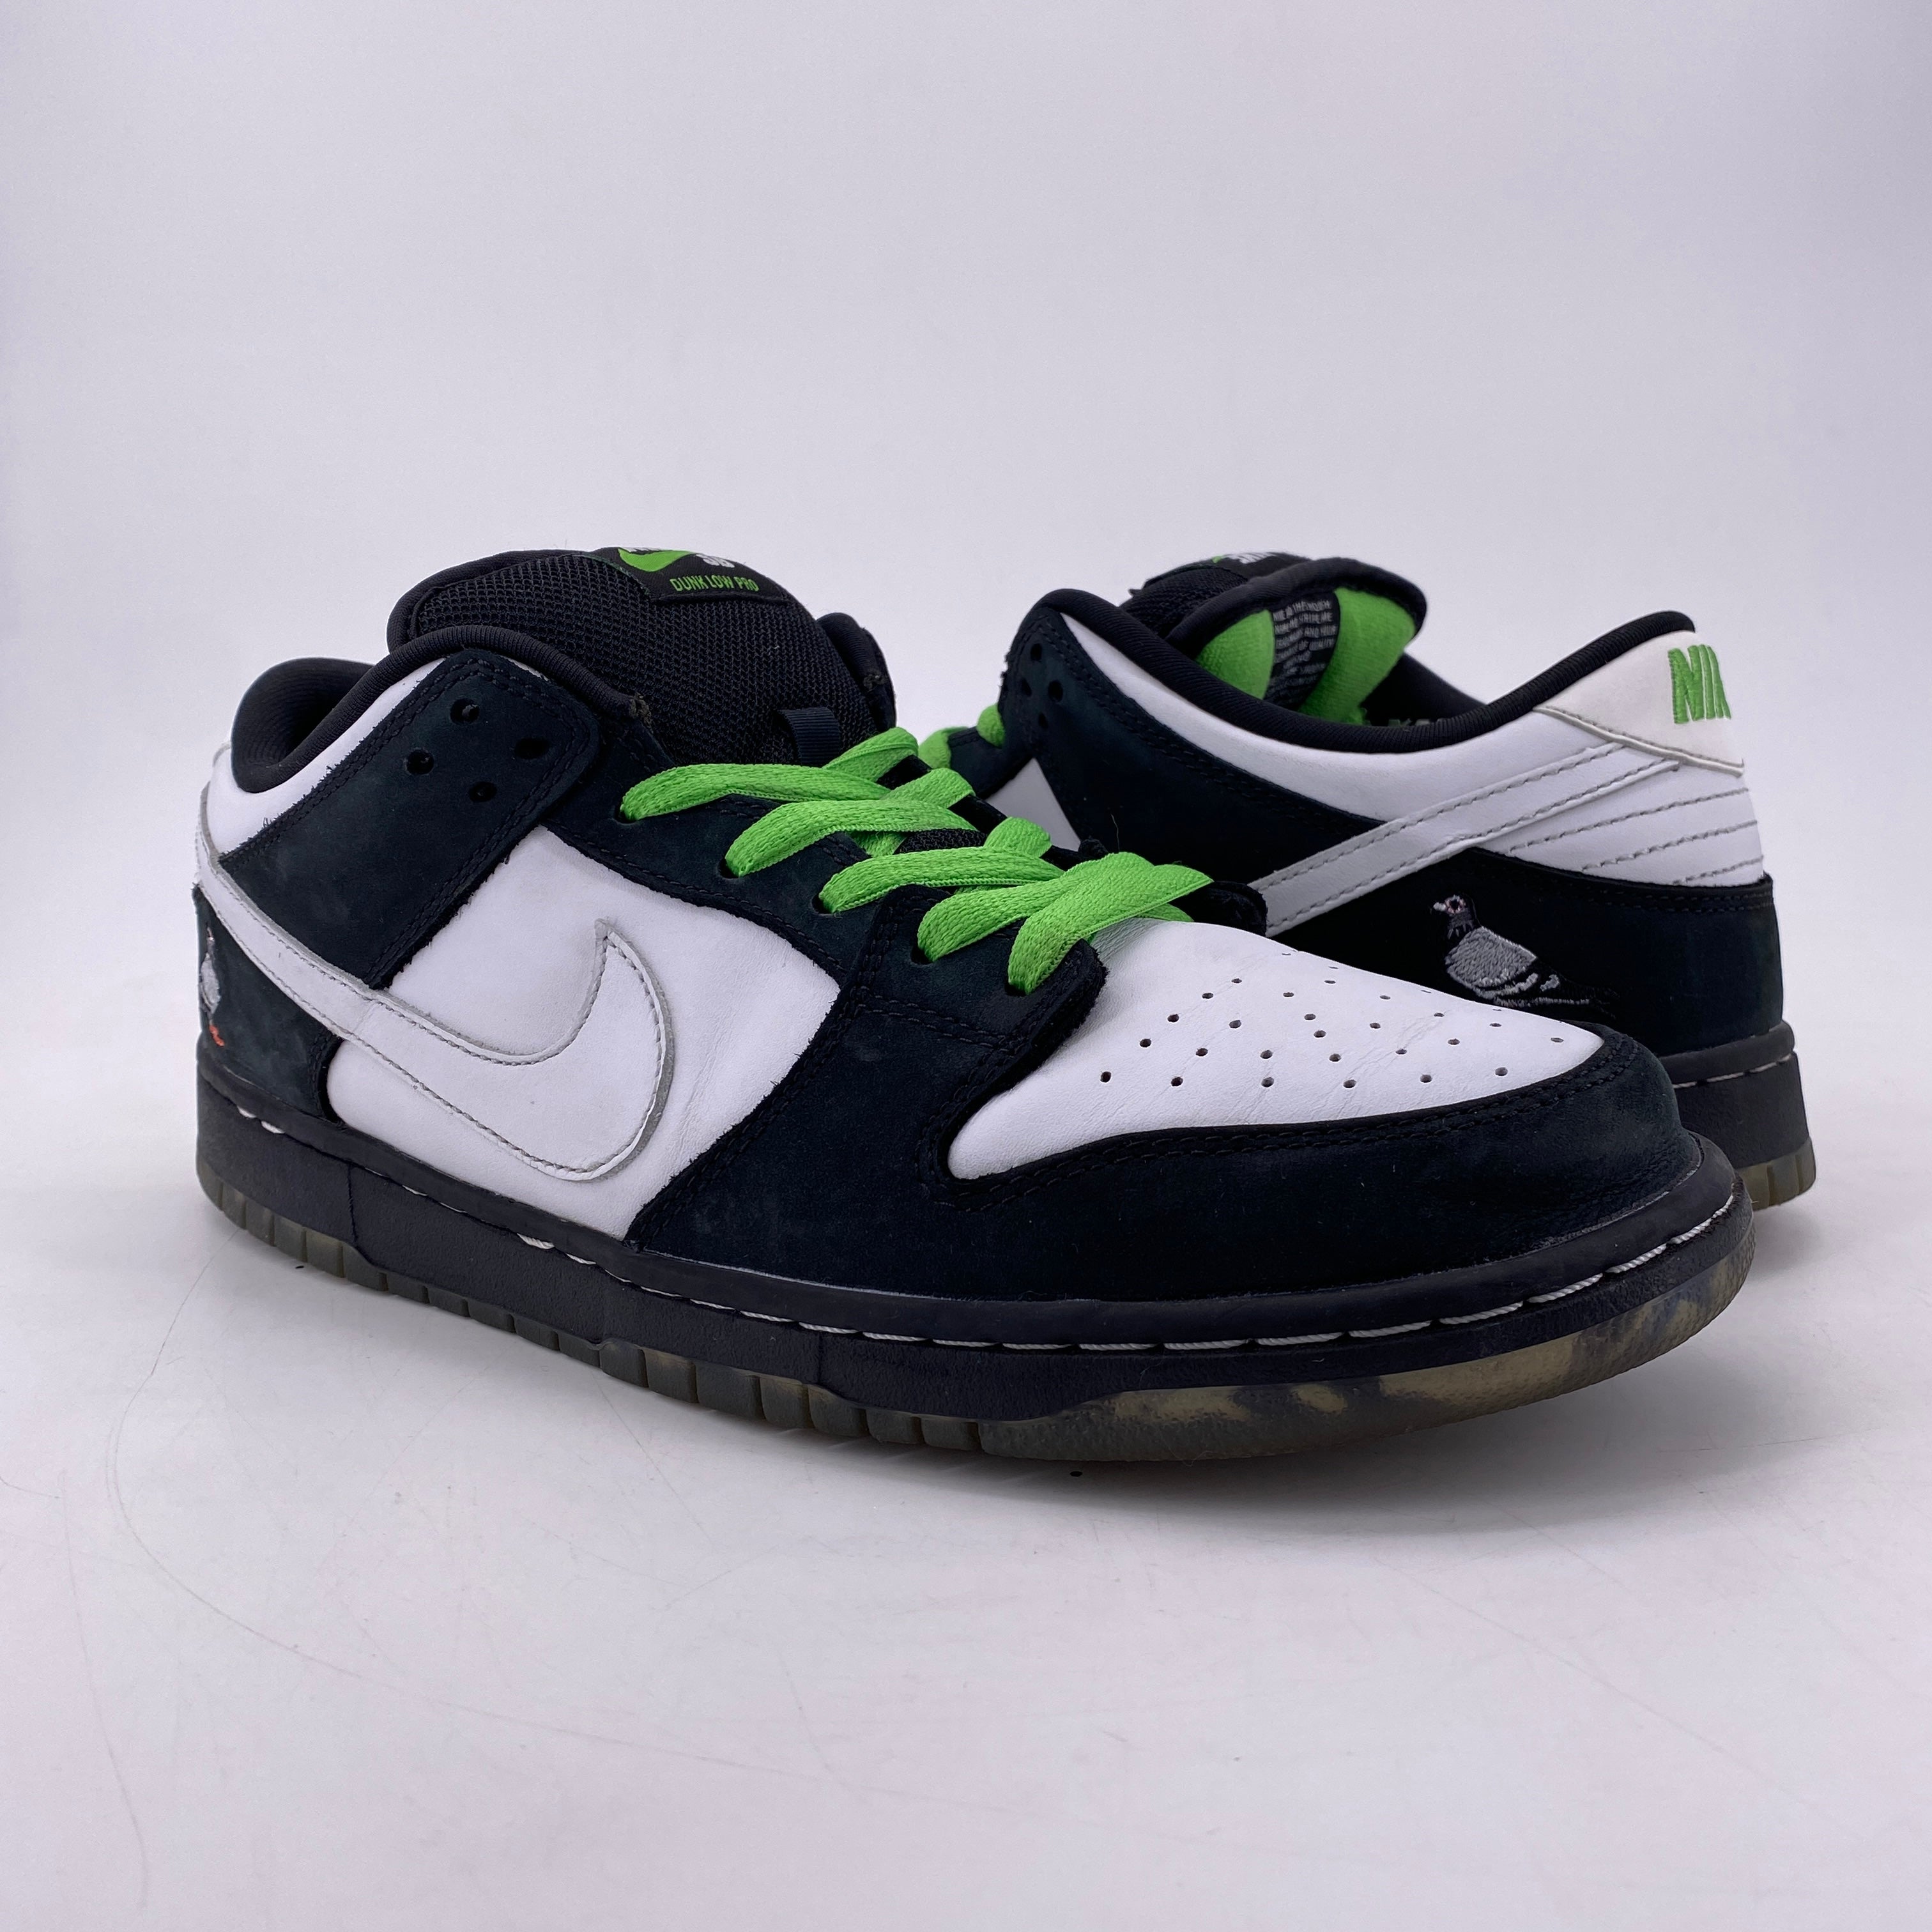 Nike cheapest nike air jordan shoes for women "Staple Panda Pigeon" 2019 Used Size 11